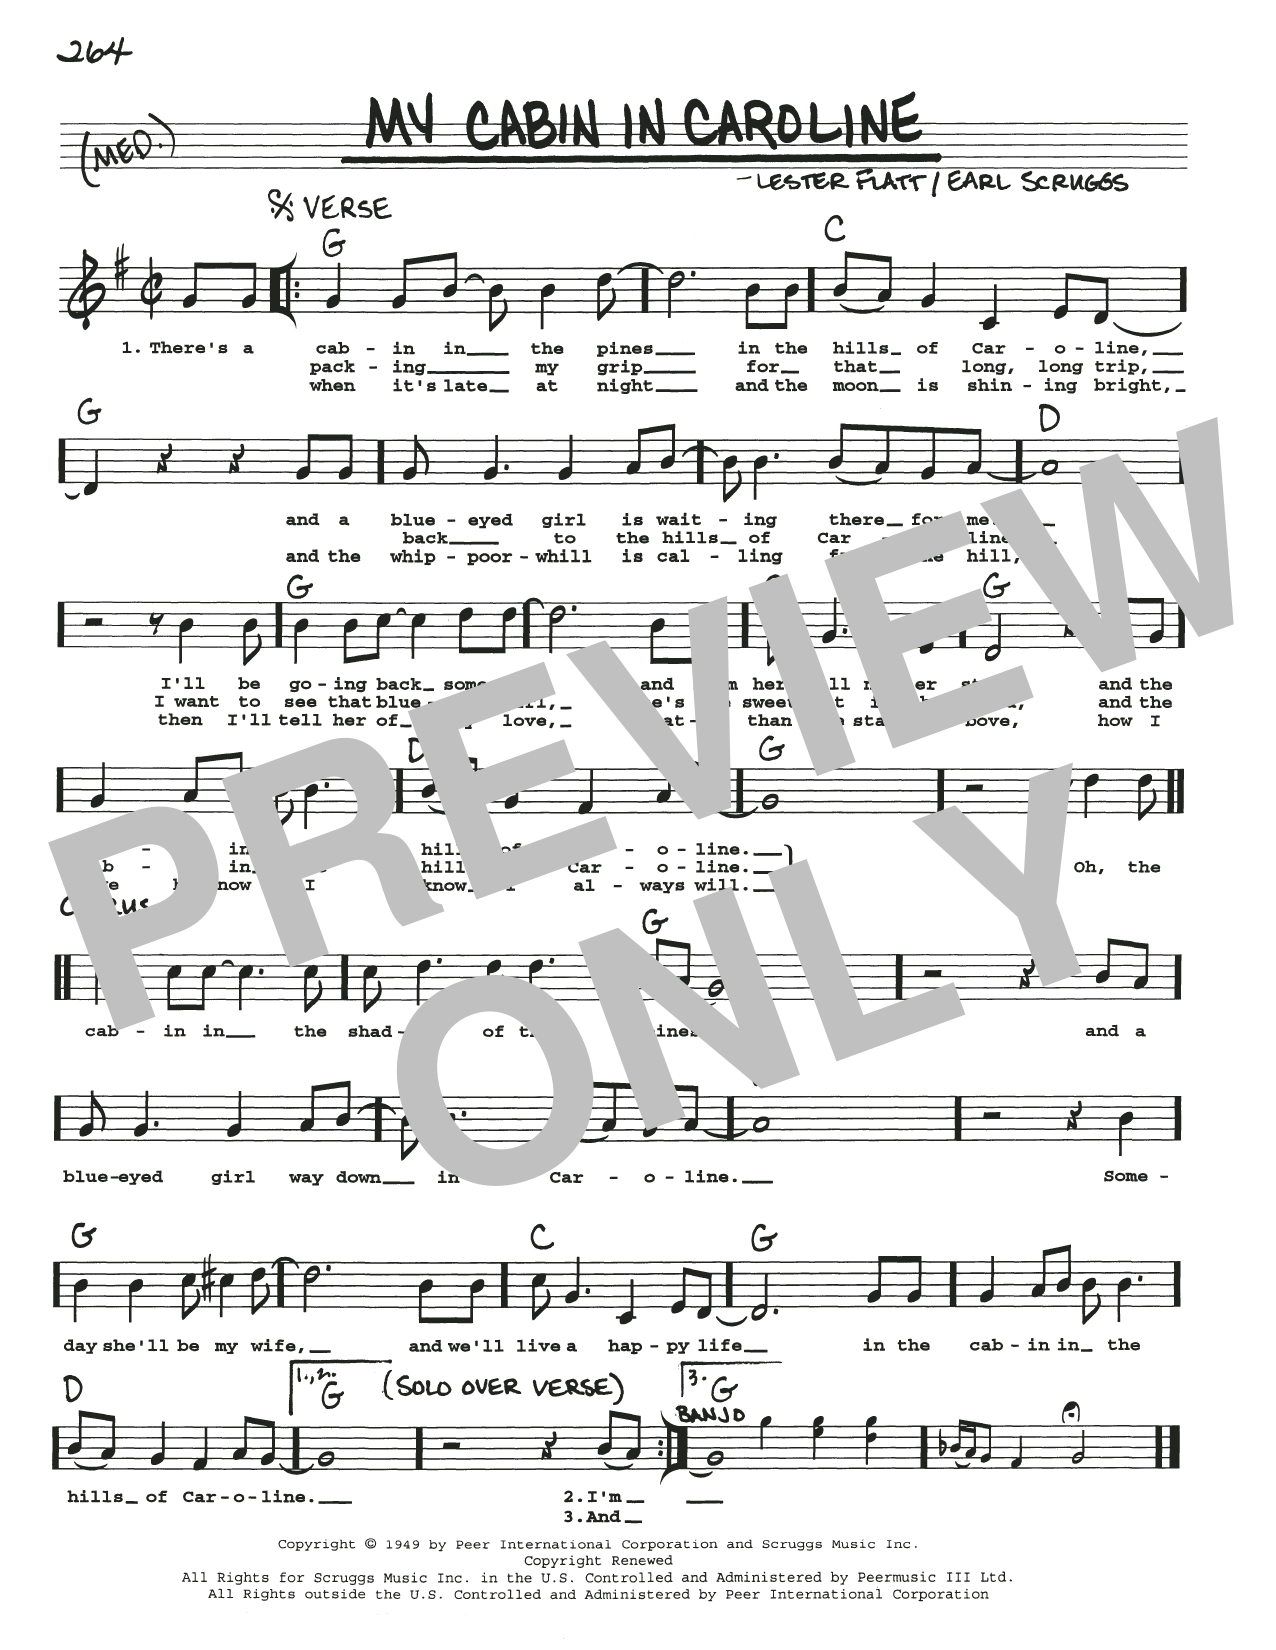 Flatt & Scruggs My Cabin In Caroline Sheet Music Notes & Chords for Real Book – Melody, Lyrics & Chords - Download or Print PDF